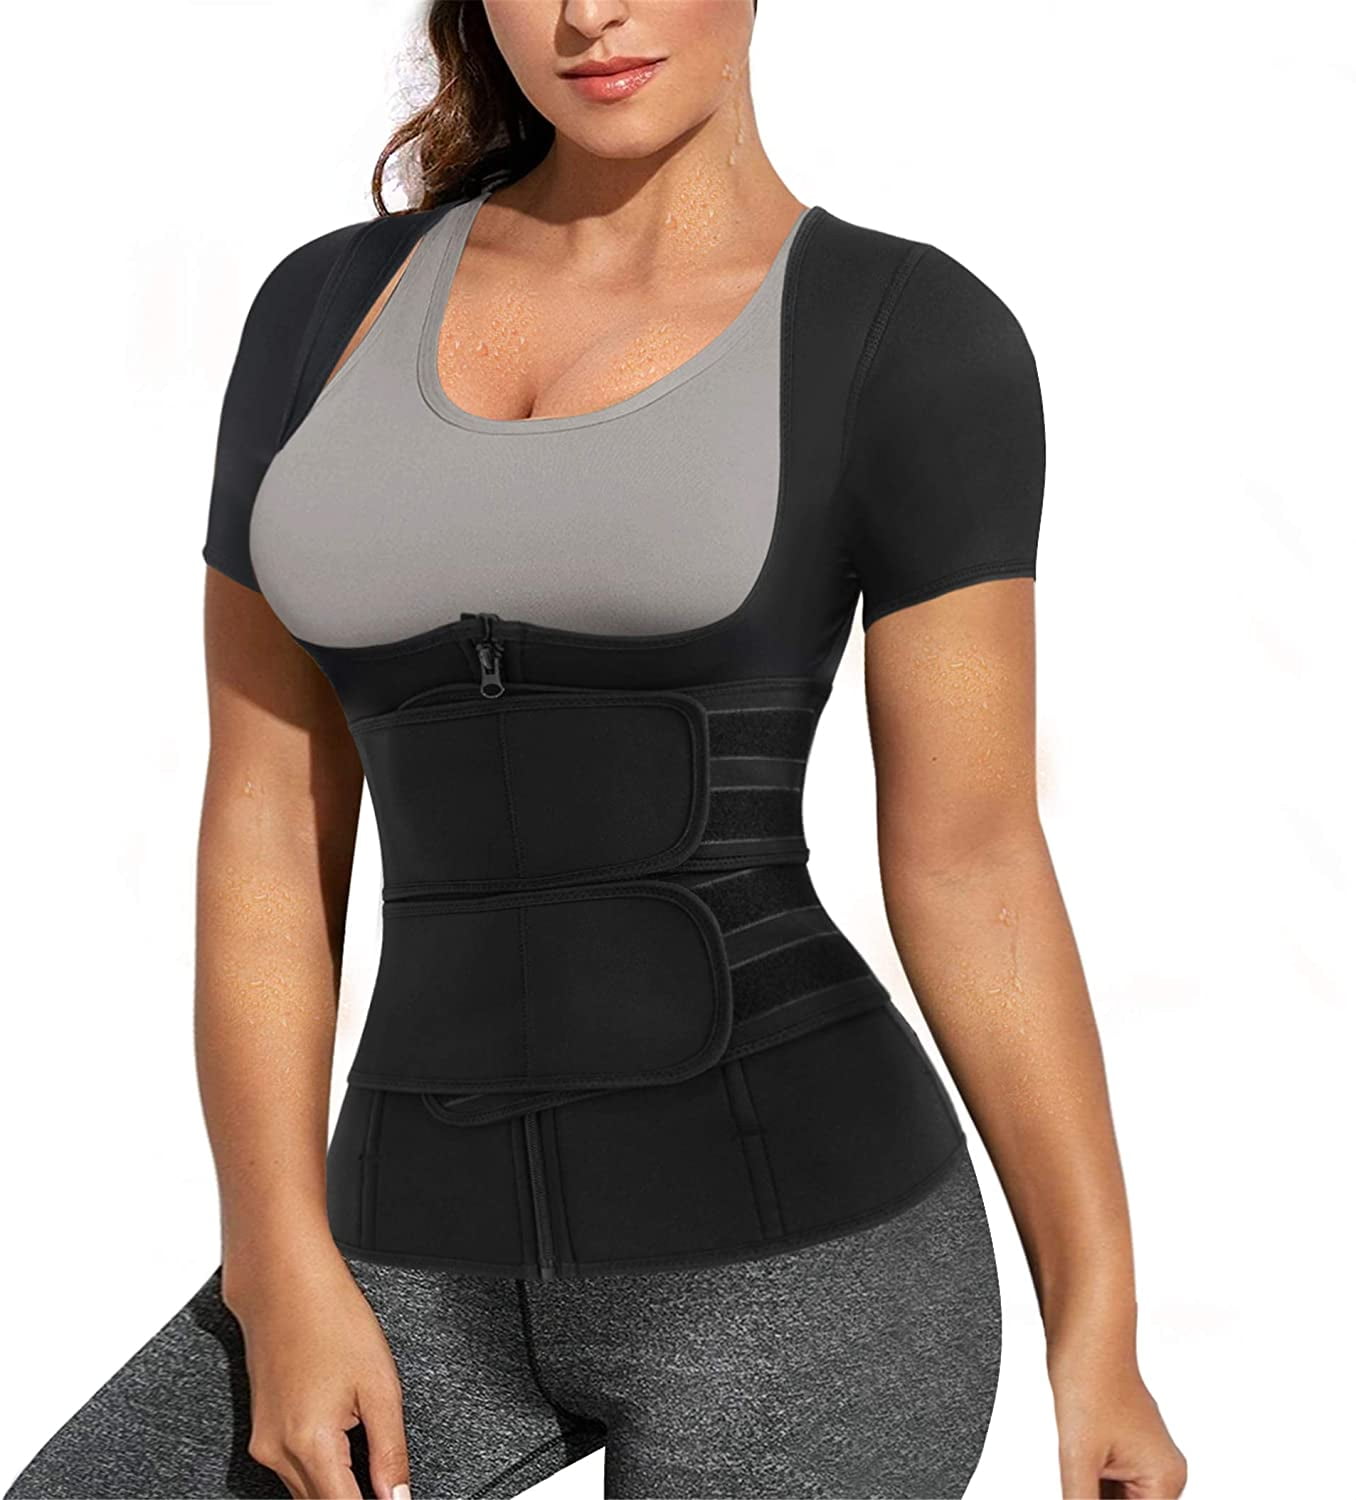 Sweat Vest Waist Trainer for Women Sauna Suit Adjustable Belt with Zipper Body Shaper Slimming Plus Size 